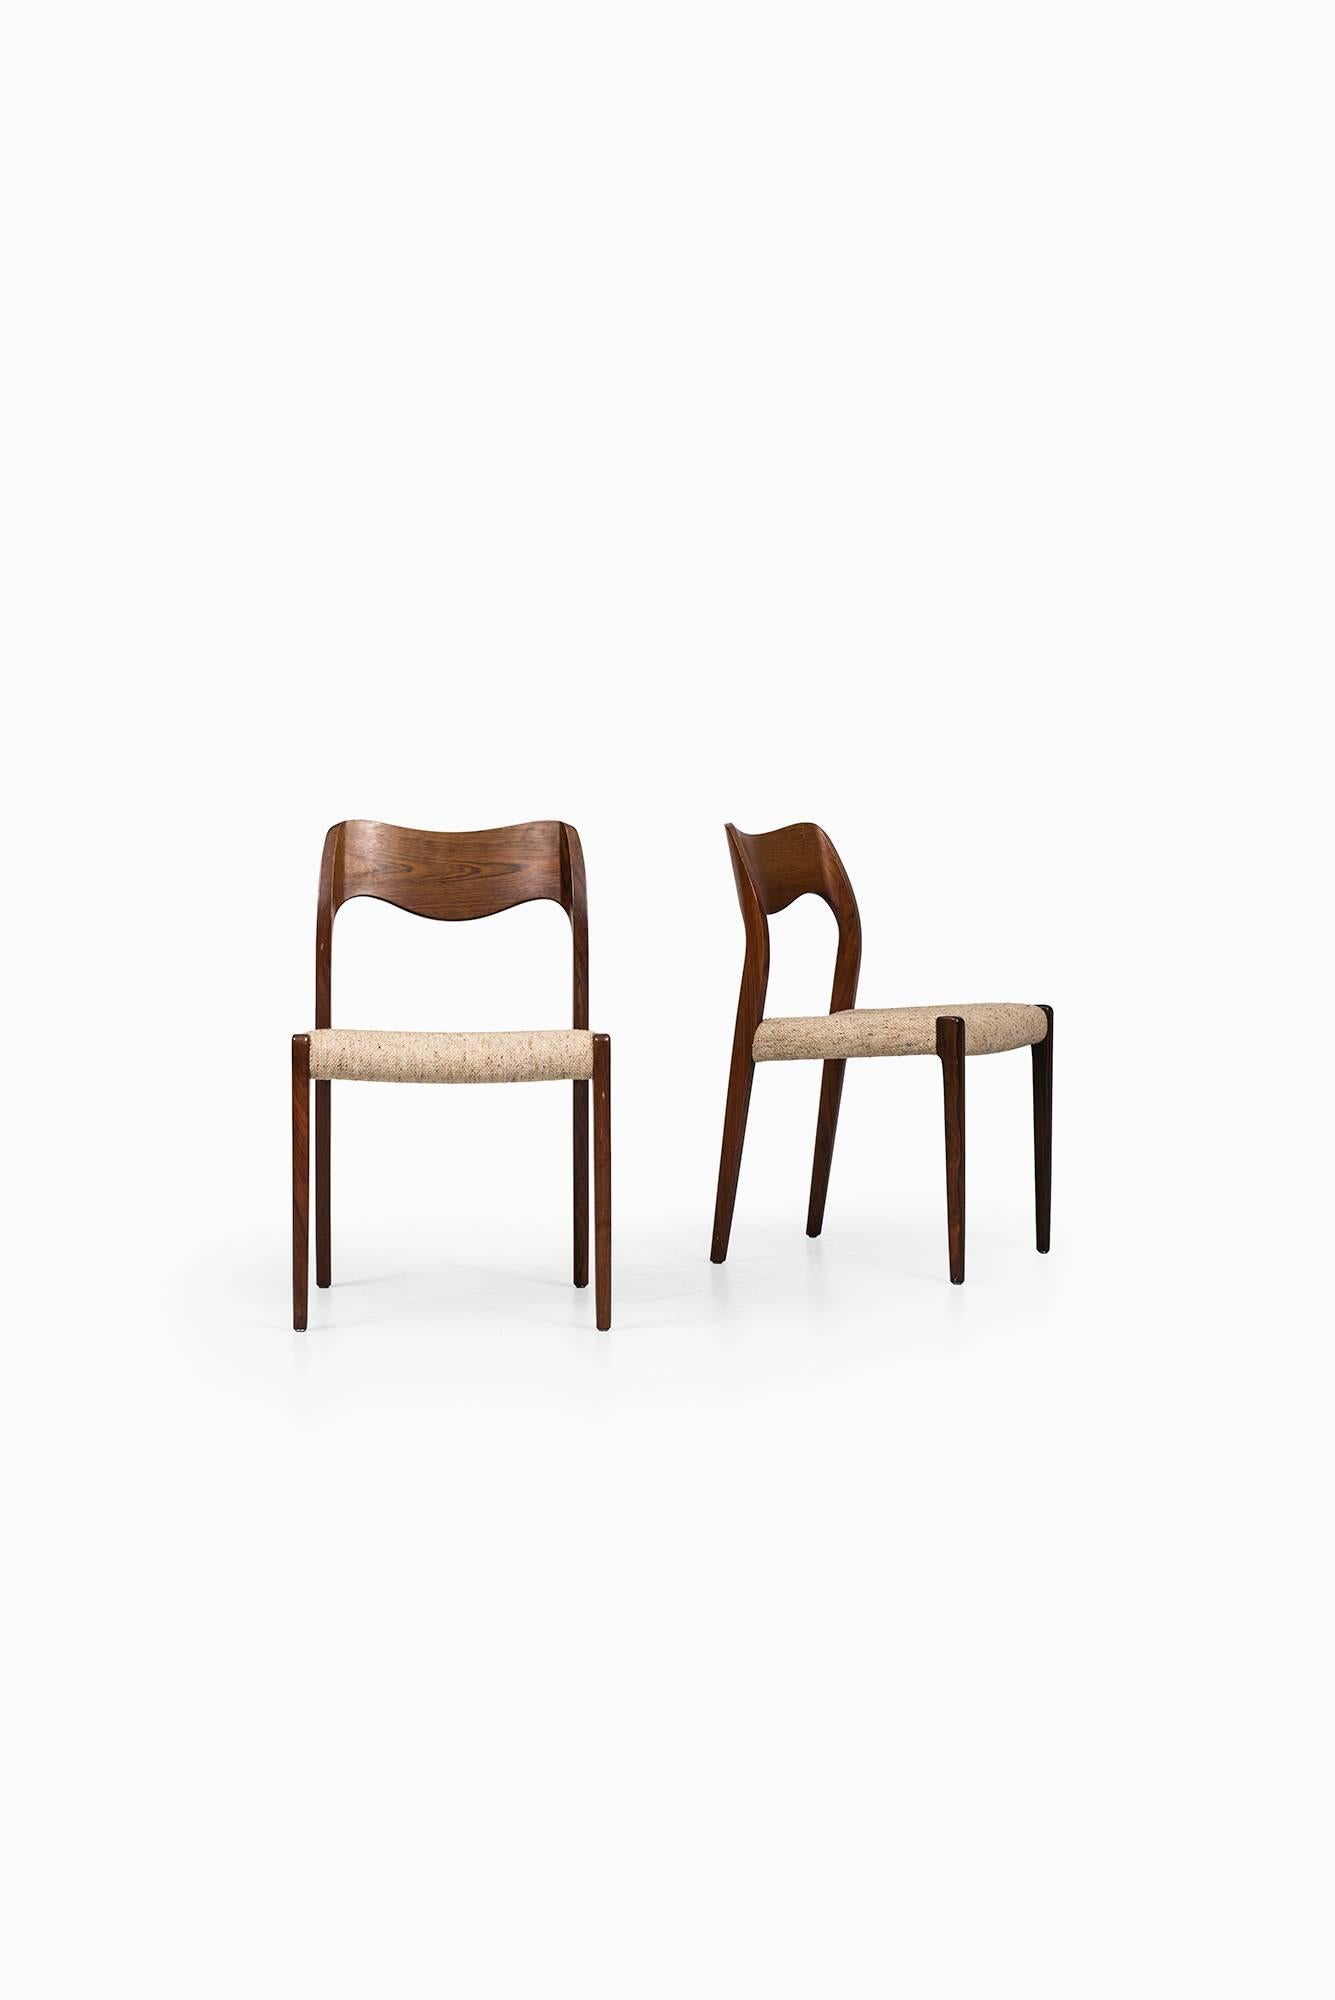 Set of six dining chairs model 71 designed by Niels O. Møller. Produced by J.L Møllers Møbelfabrik in Denmark.